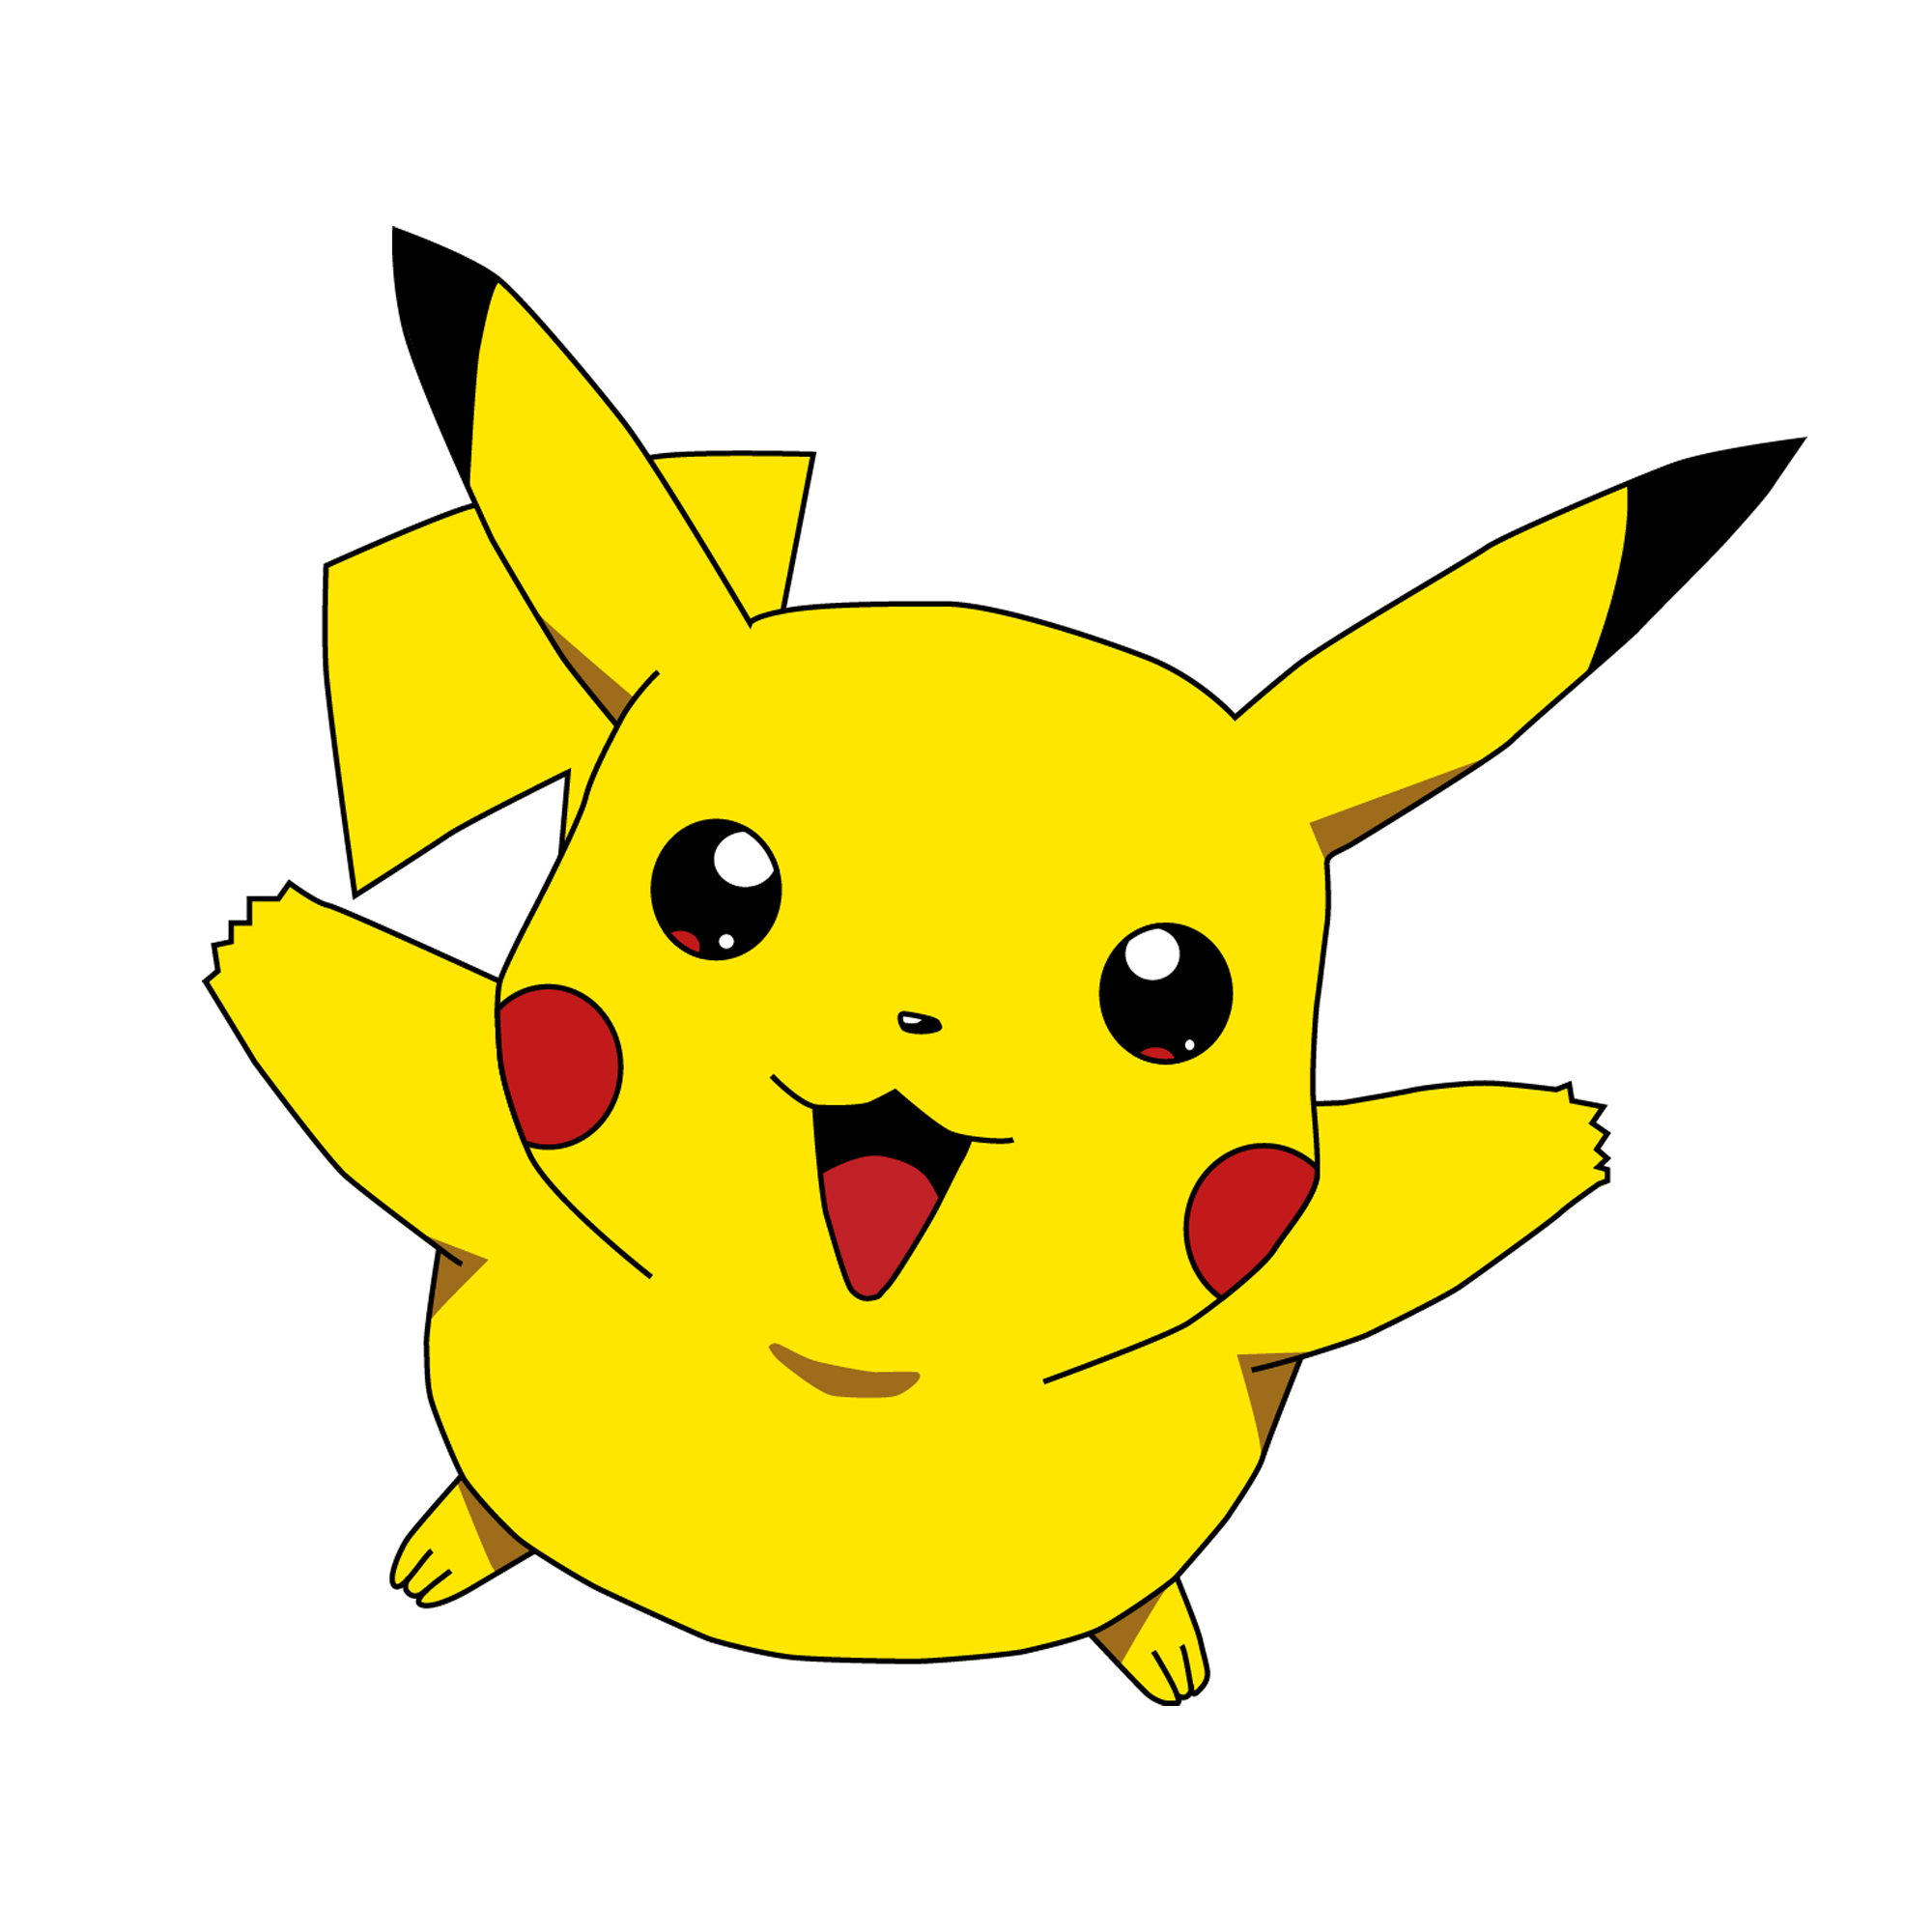 1-pikachu-pokemon-rederei-fm-bundespraesident